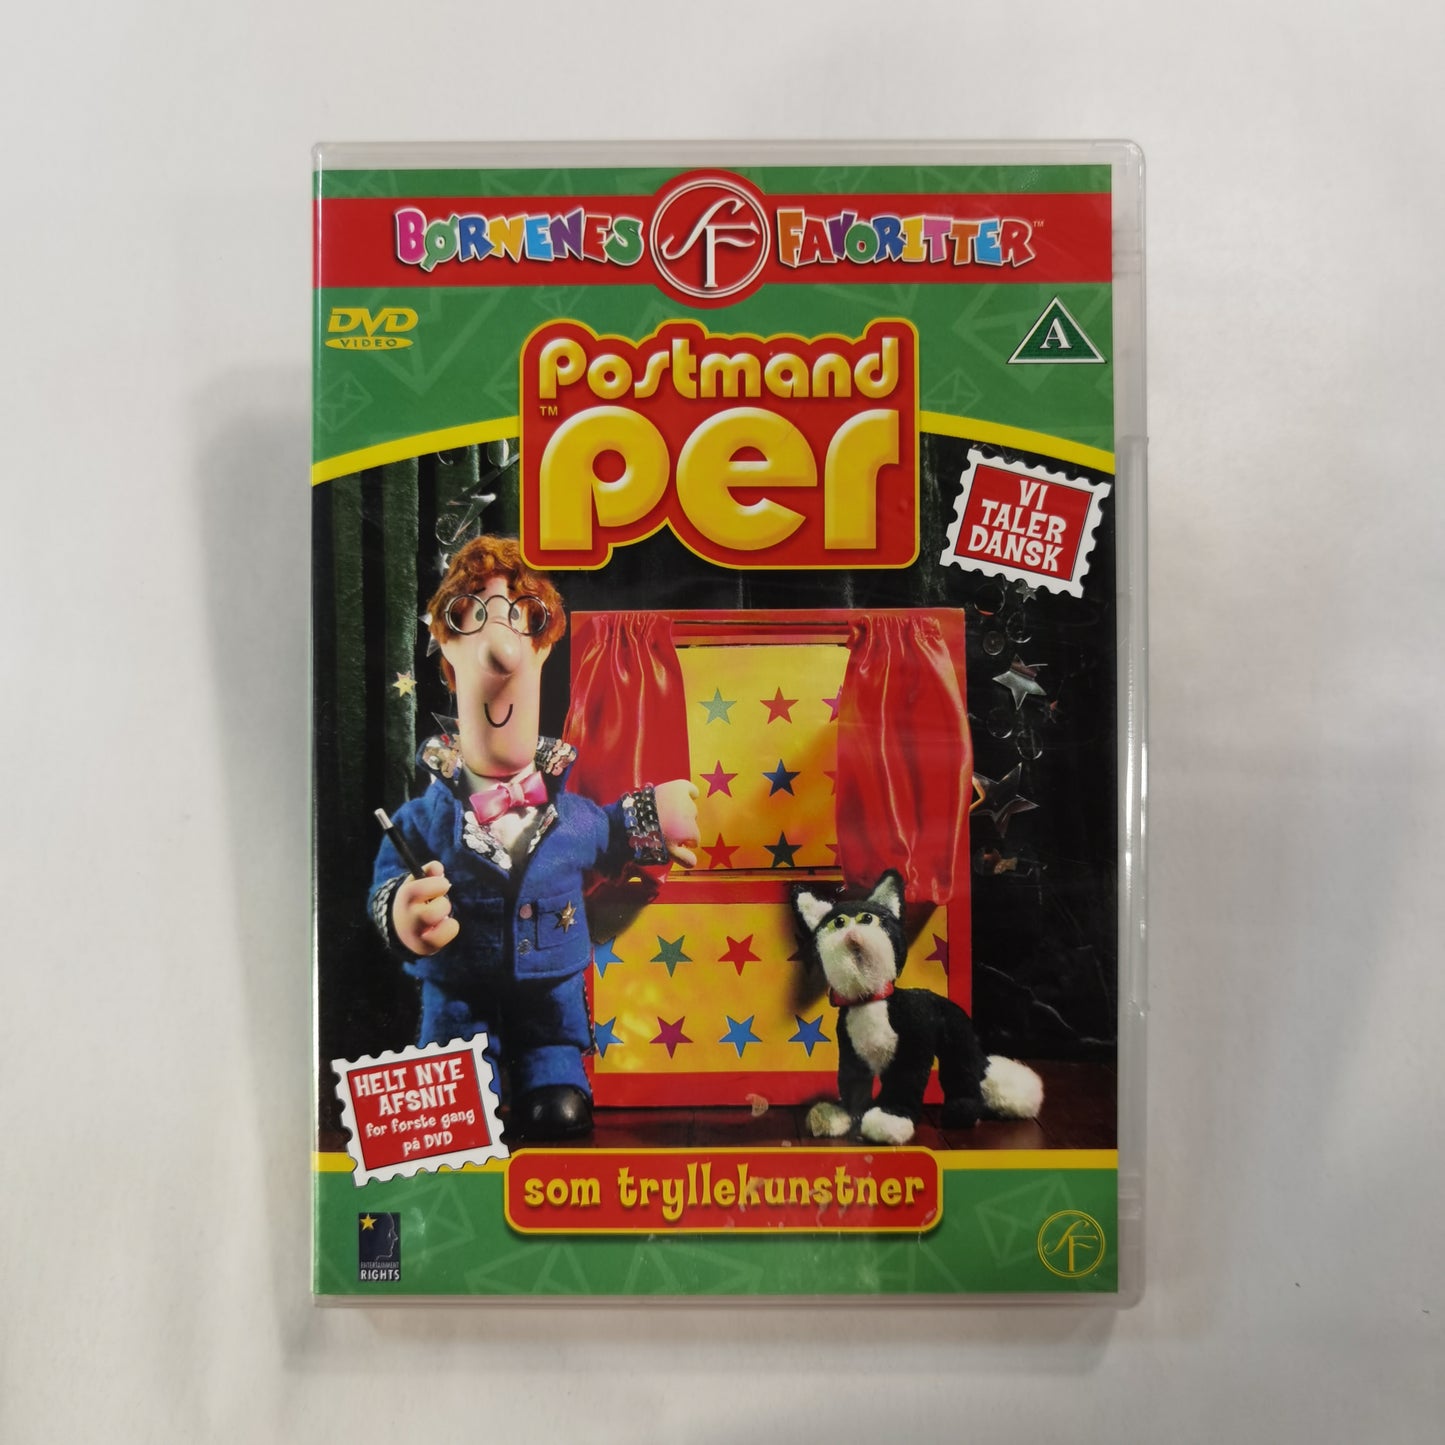 Postman Pat ( Postmand Per: Vol. 12 - Som Tryllekunstner ) - DVD DK 2005 Børnenes Favoritter